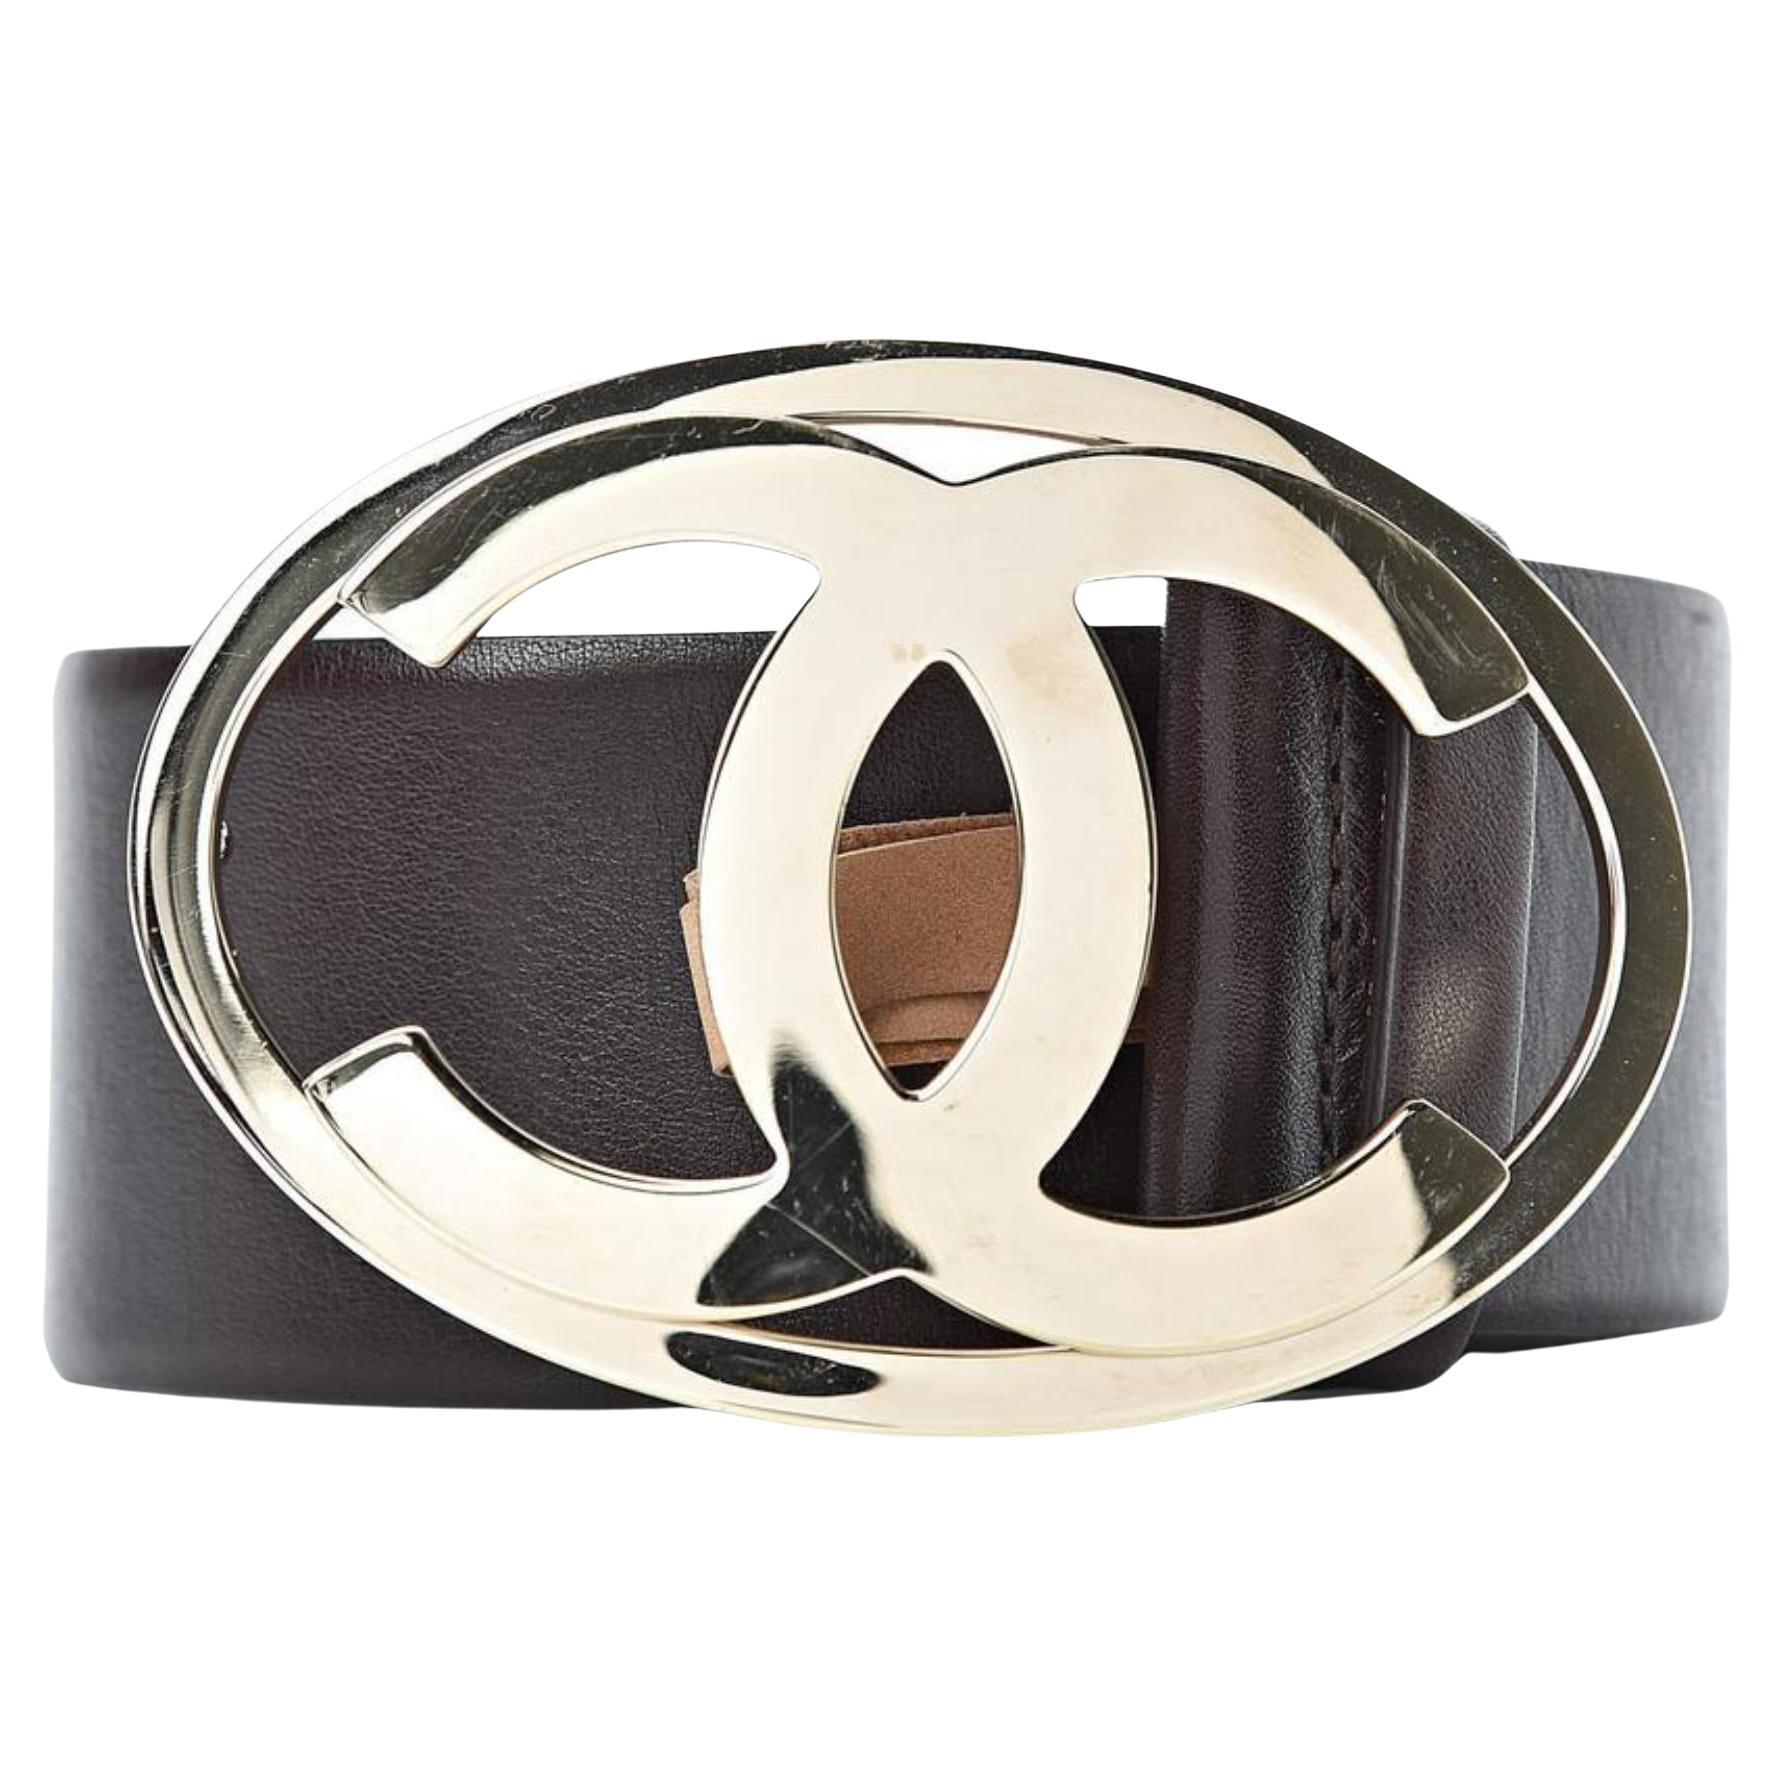 Chanel Double CC Buckle Balck leather Belt. Size 75 (30 US)